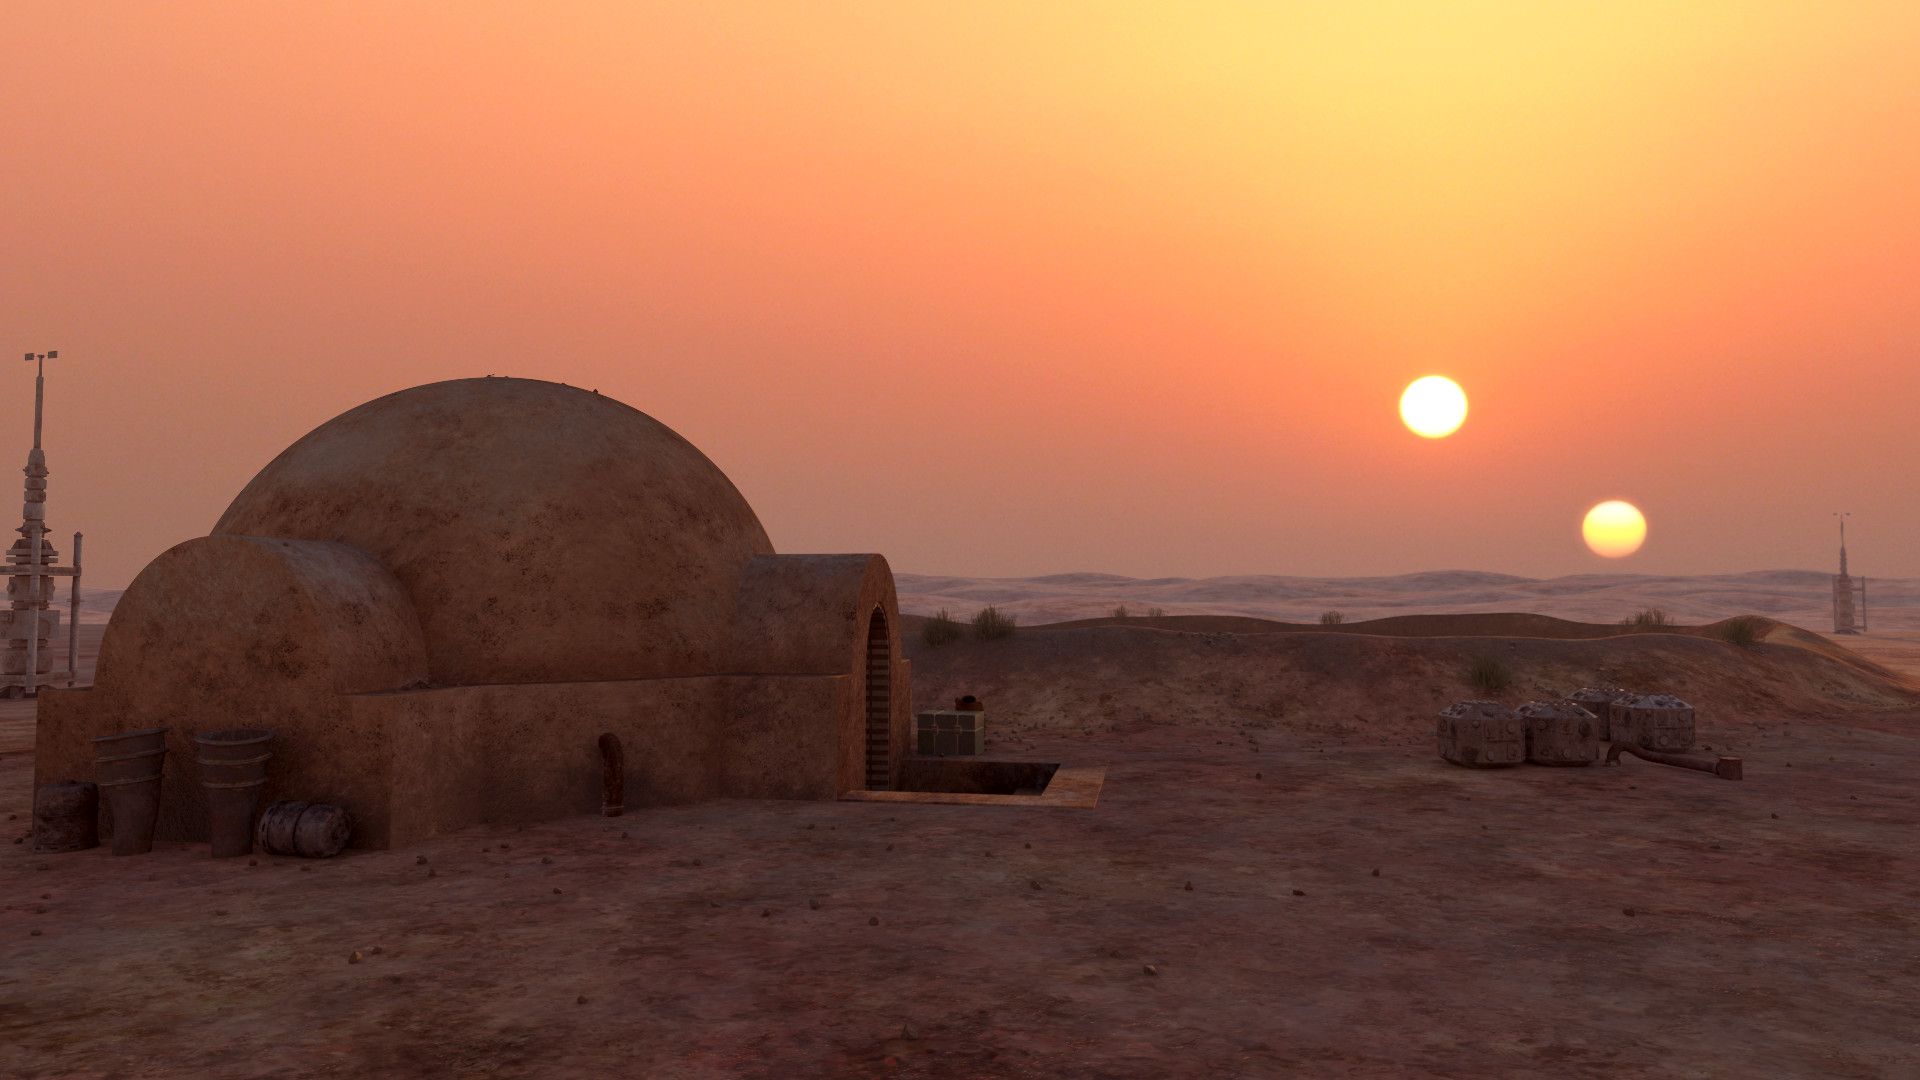 Tatooine's double suns set over a moisture farm